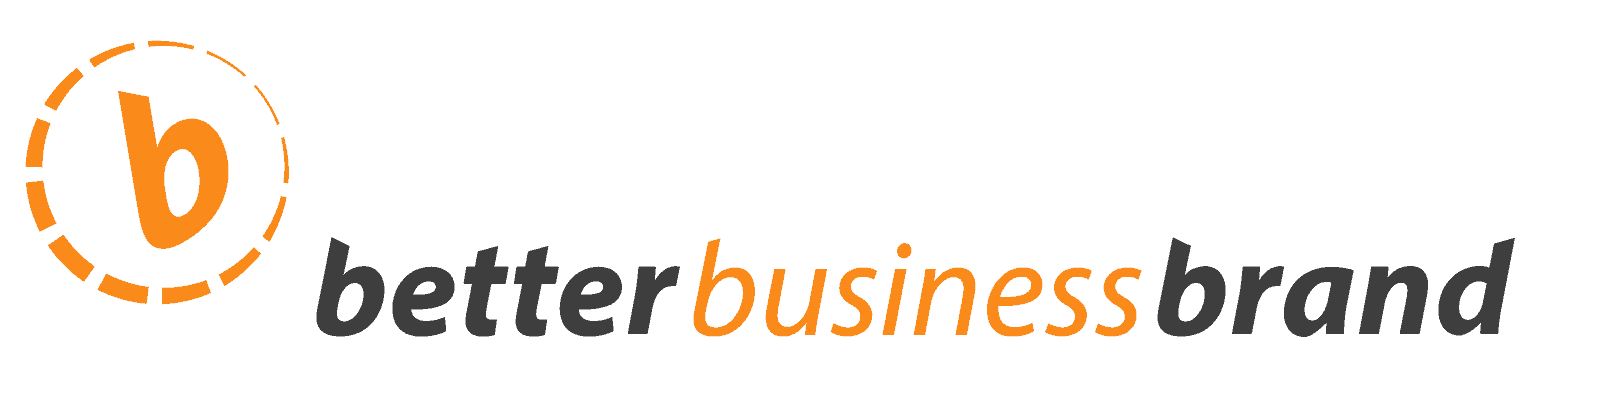 BBB-Logo-1600x400-notag